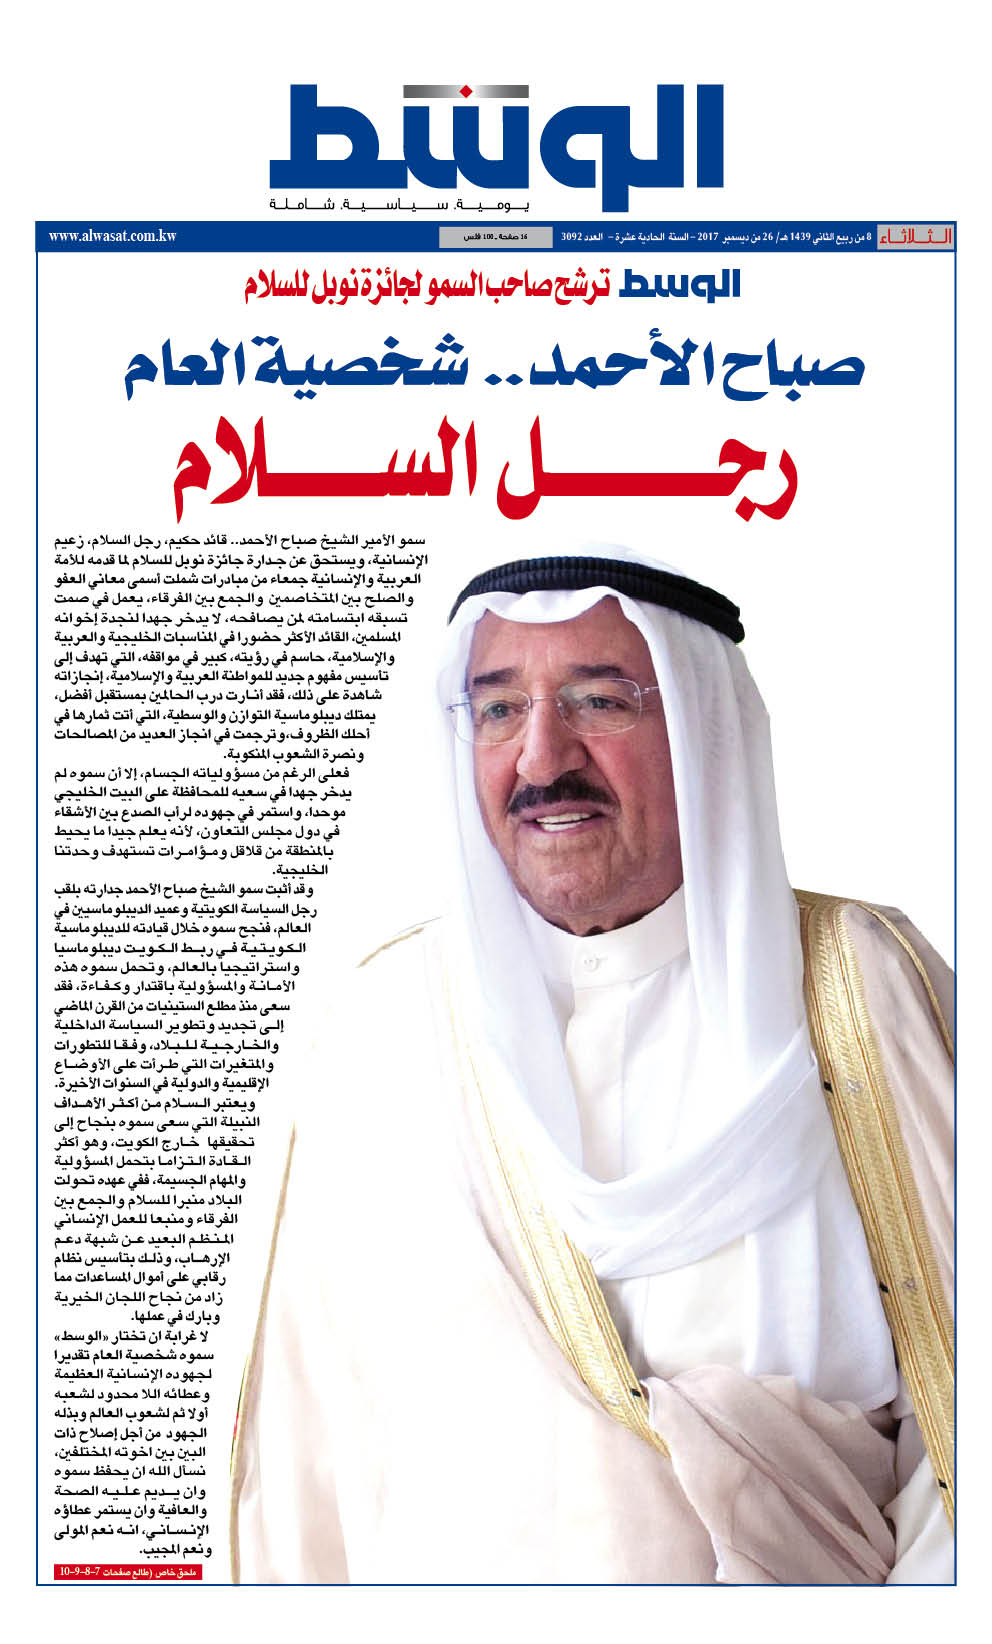 Kuwaiti newspaper Al-Wasat has called for nominating His Highness the Amir Sheikh Sabah Al-Ahmad Al-Jaber Al-Sabah for the Nobel Prize for Peace